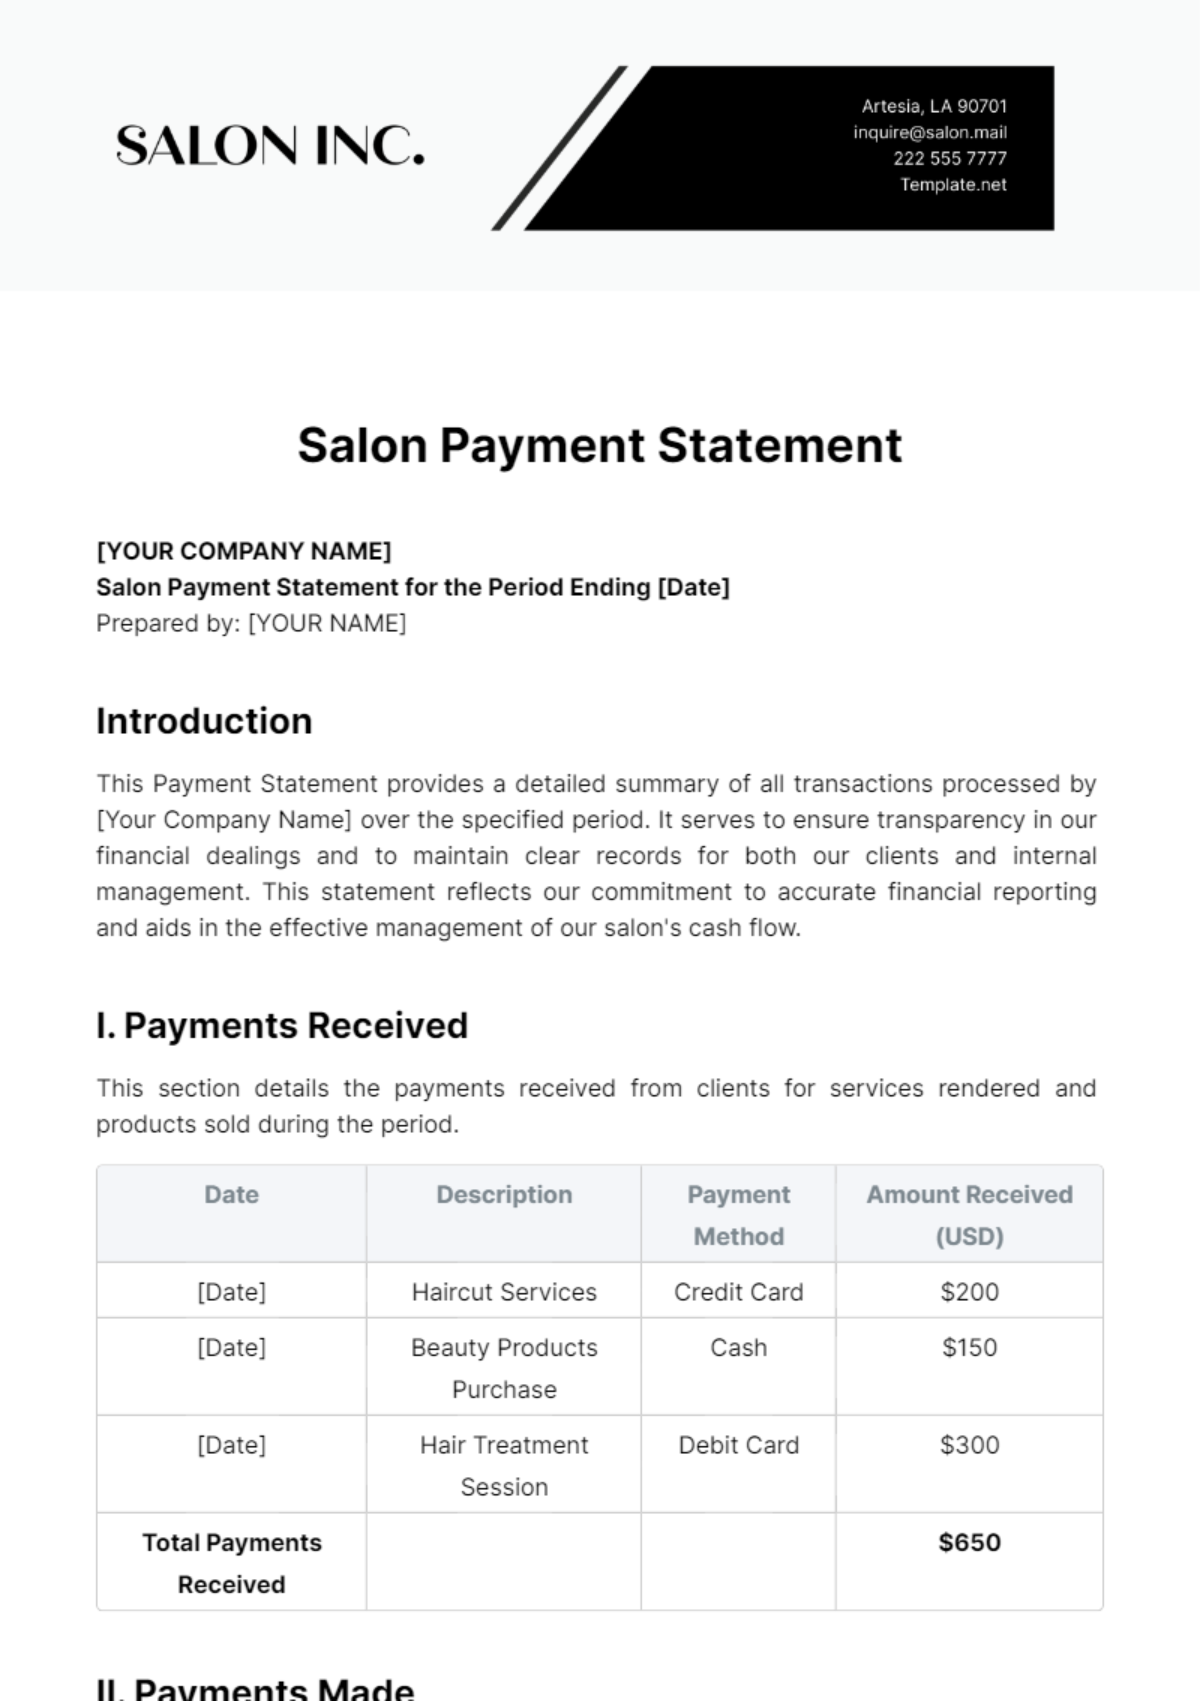 Salon Payment Statement Template